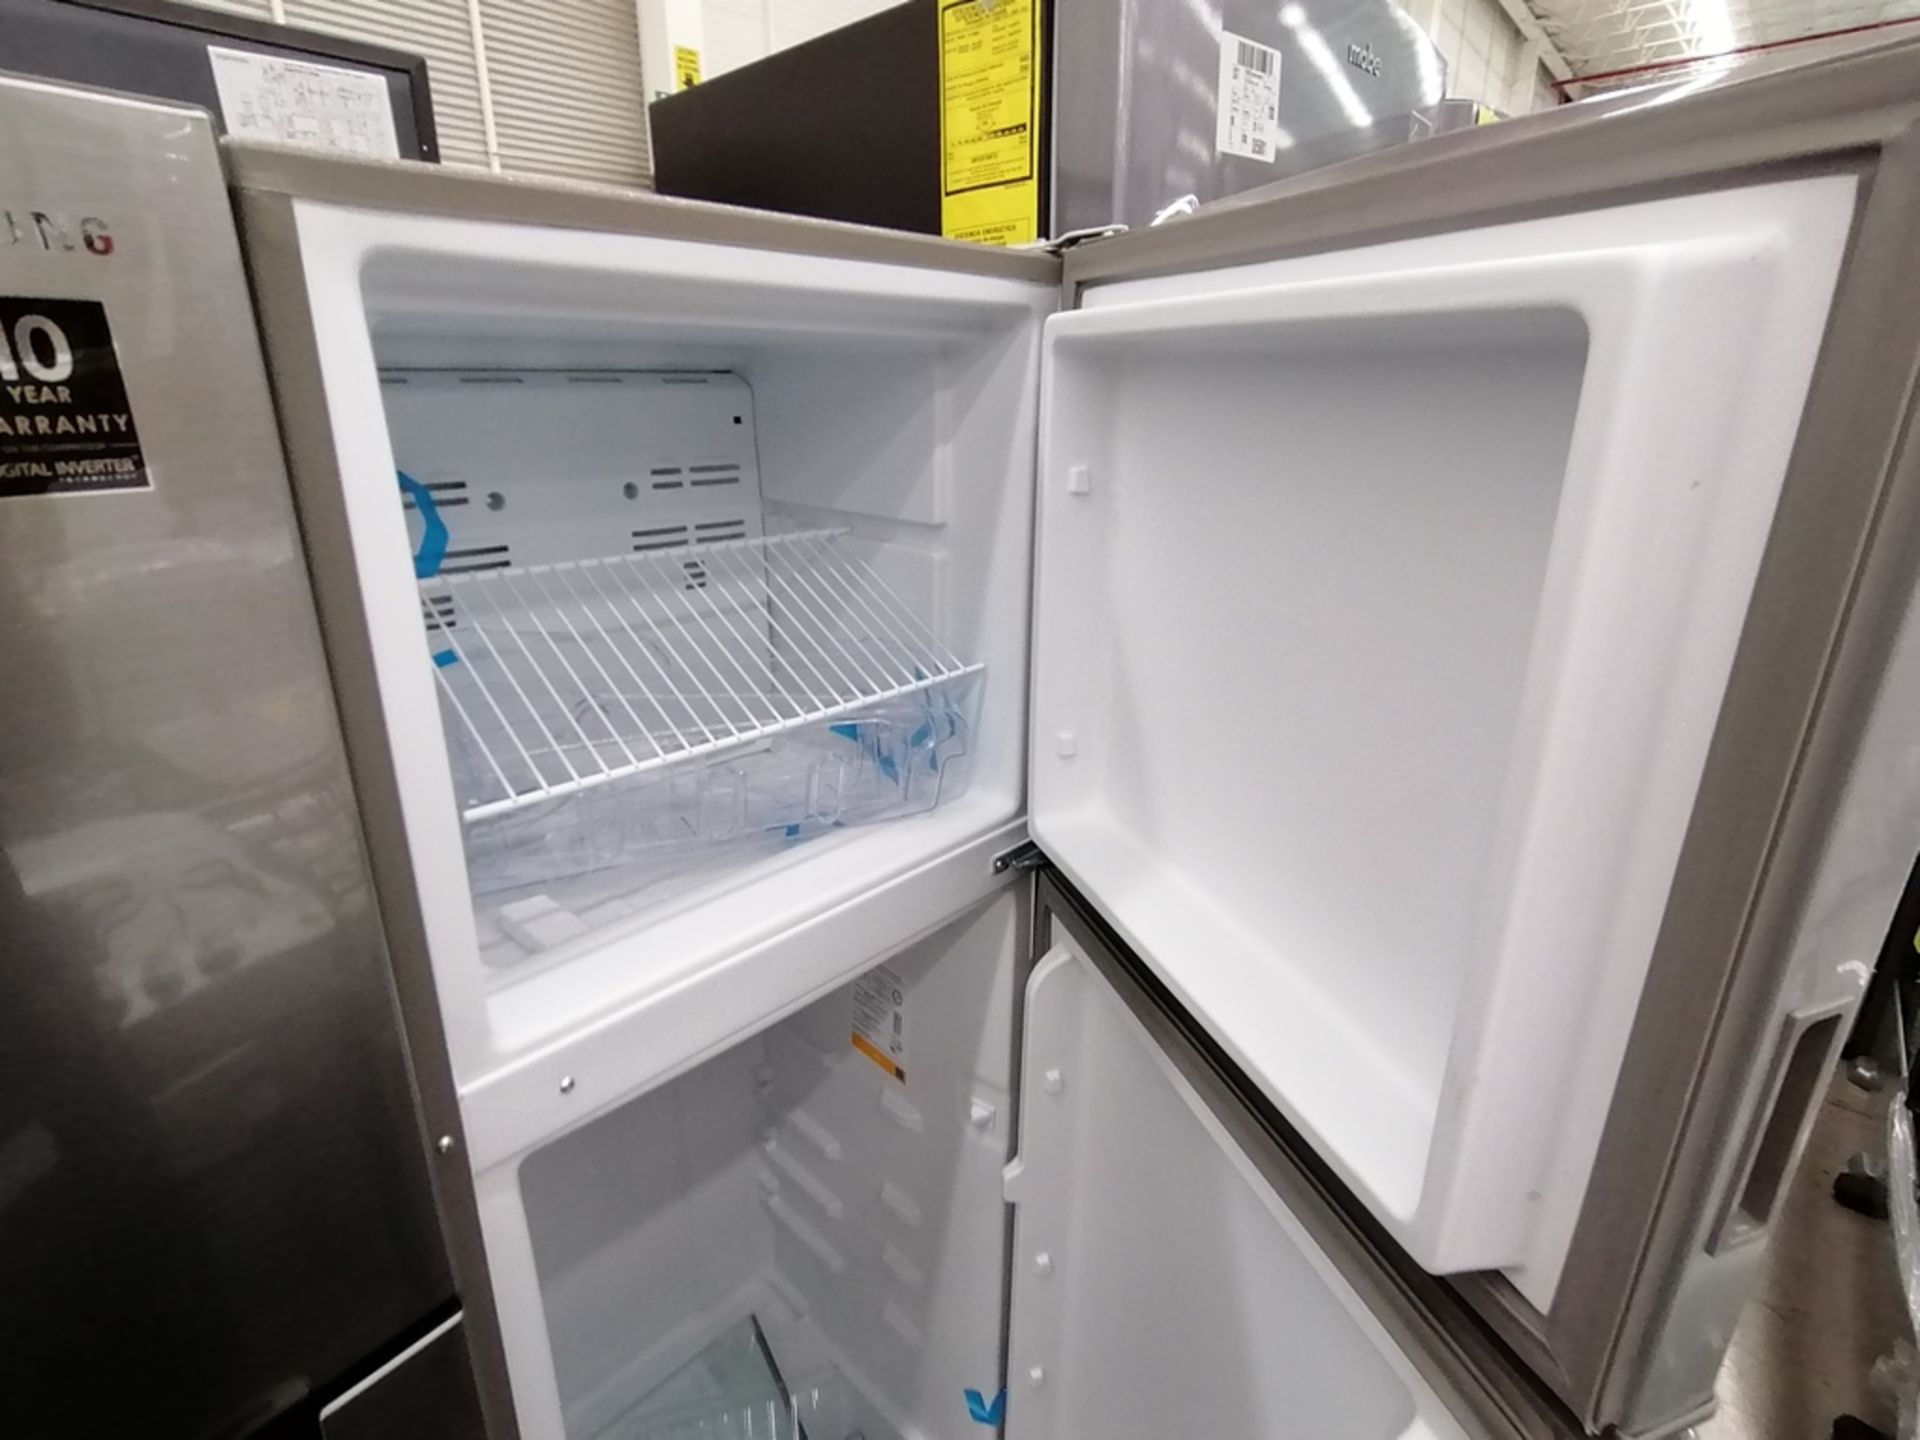 Lote de 2 refrigeradores incluye: 1 Refrigerador, Marca Samsung, Modelo RT29K500JS8, Serie 0AZS4BAR - Image 14 of 16